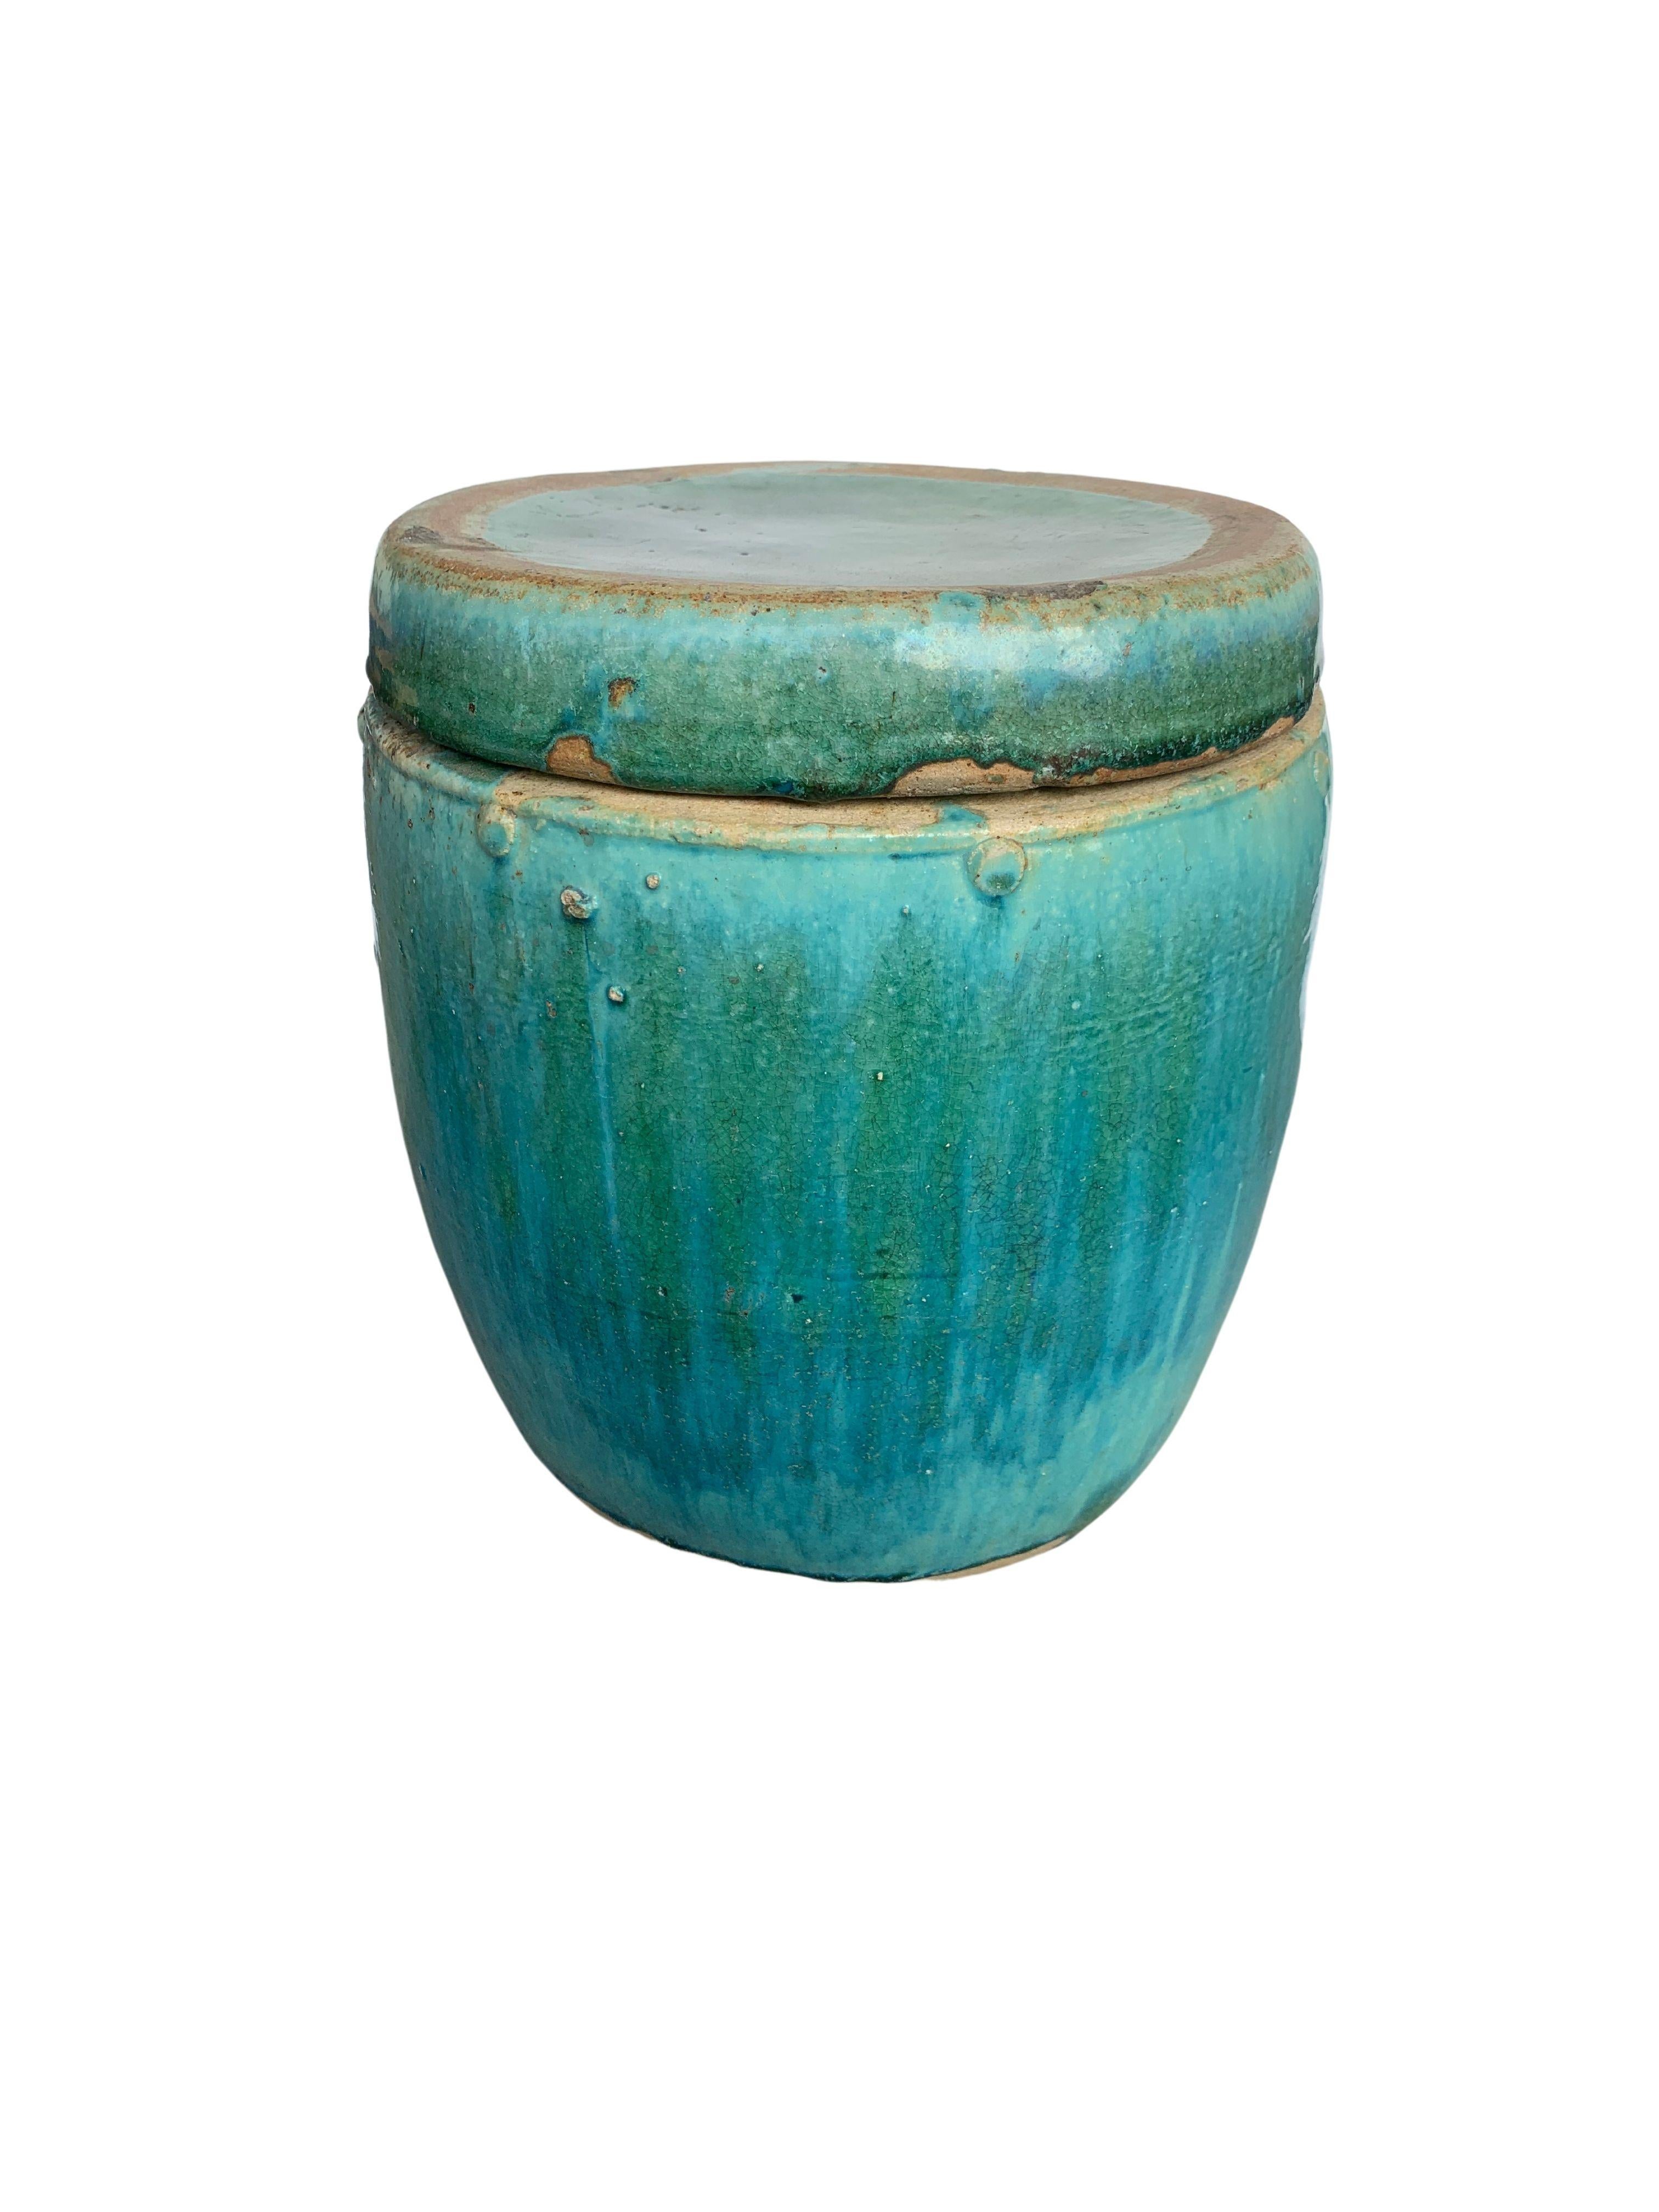 20th Century Chinese Shiwan Glazed Ceramic Jar / Planter, c. 1900 For Sale